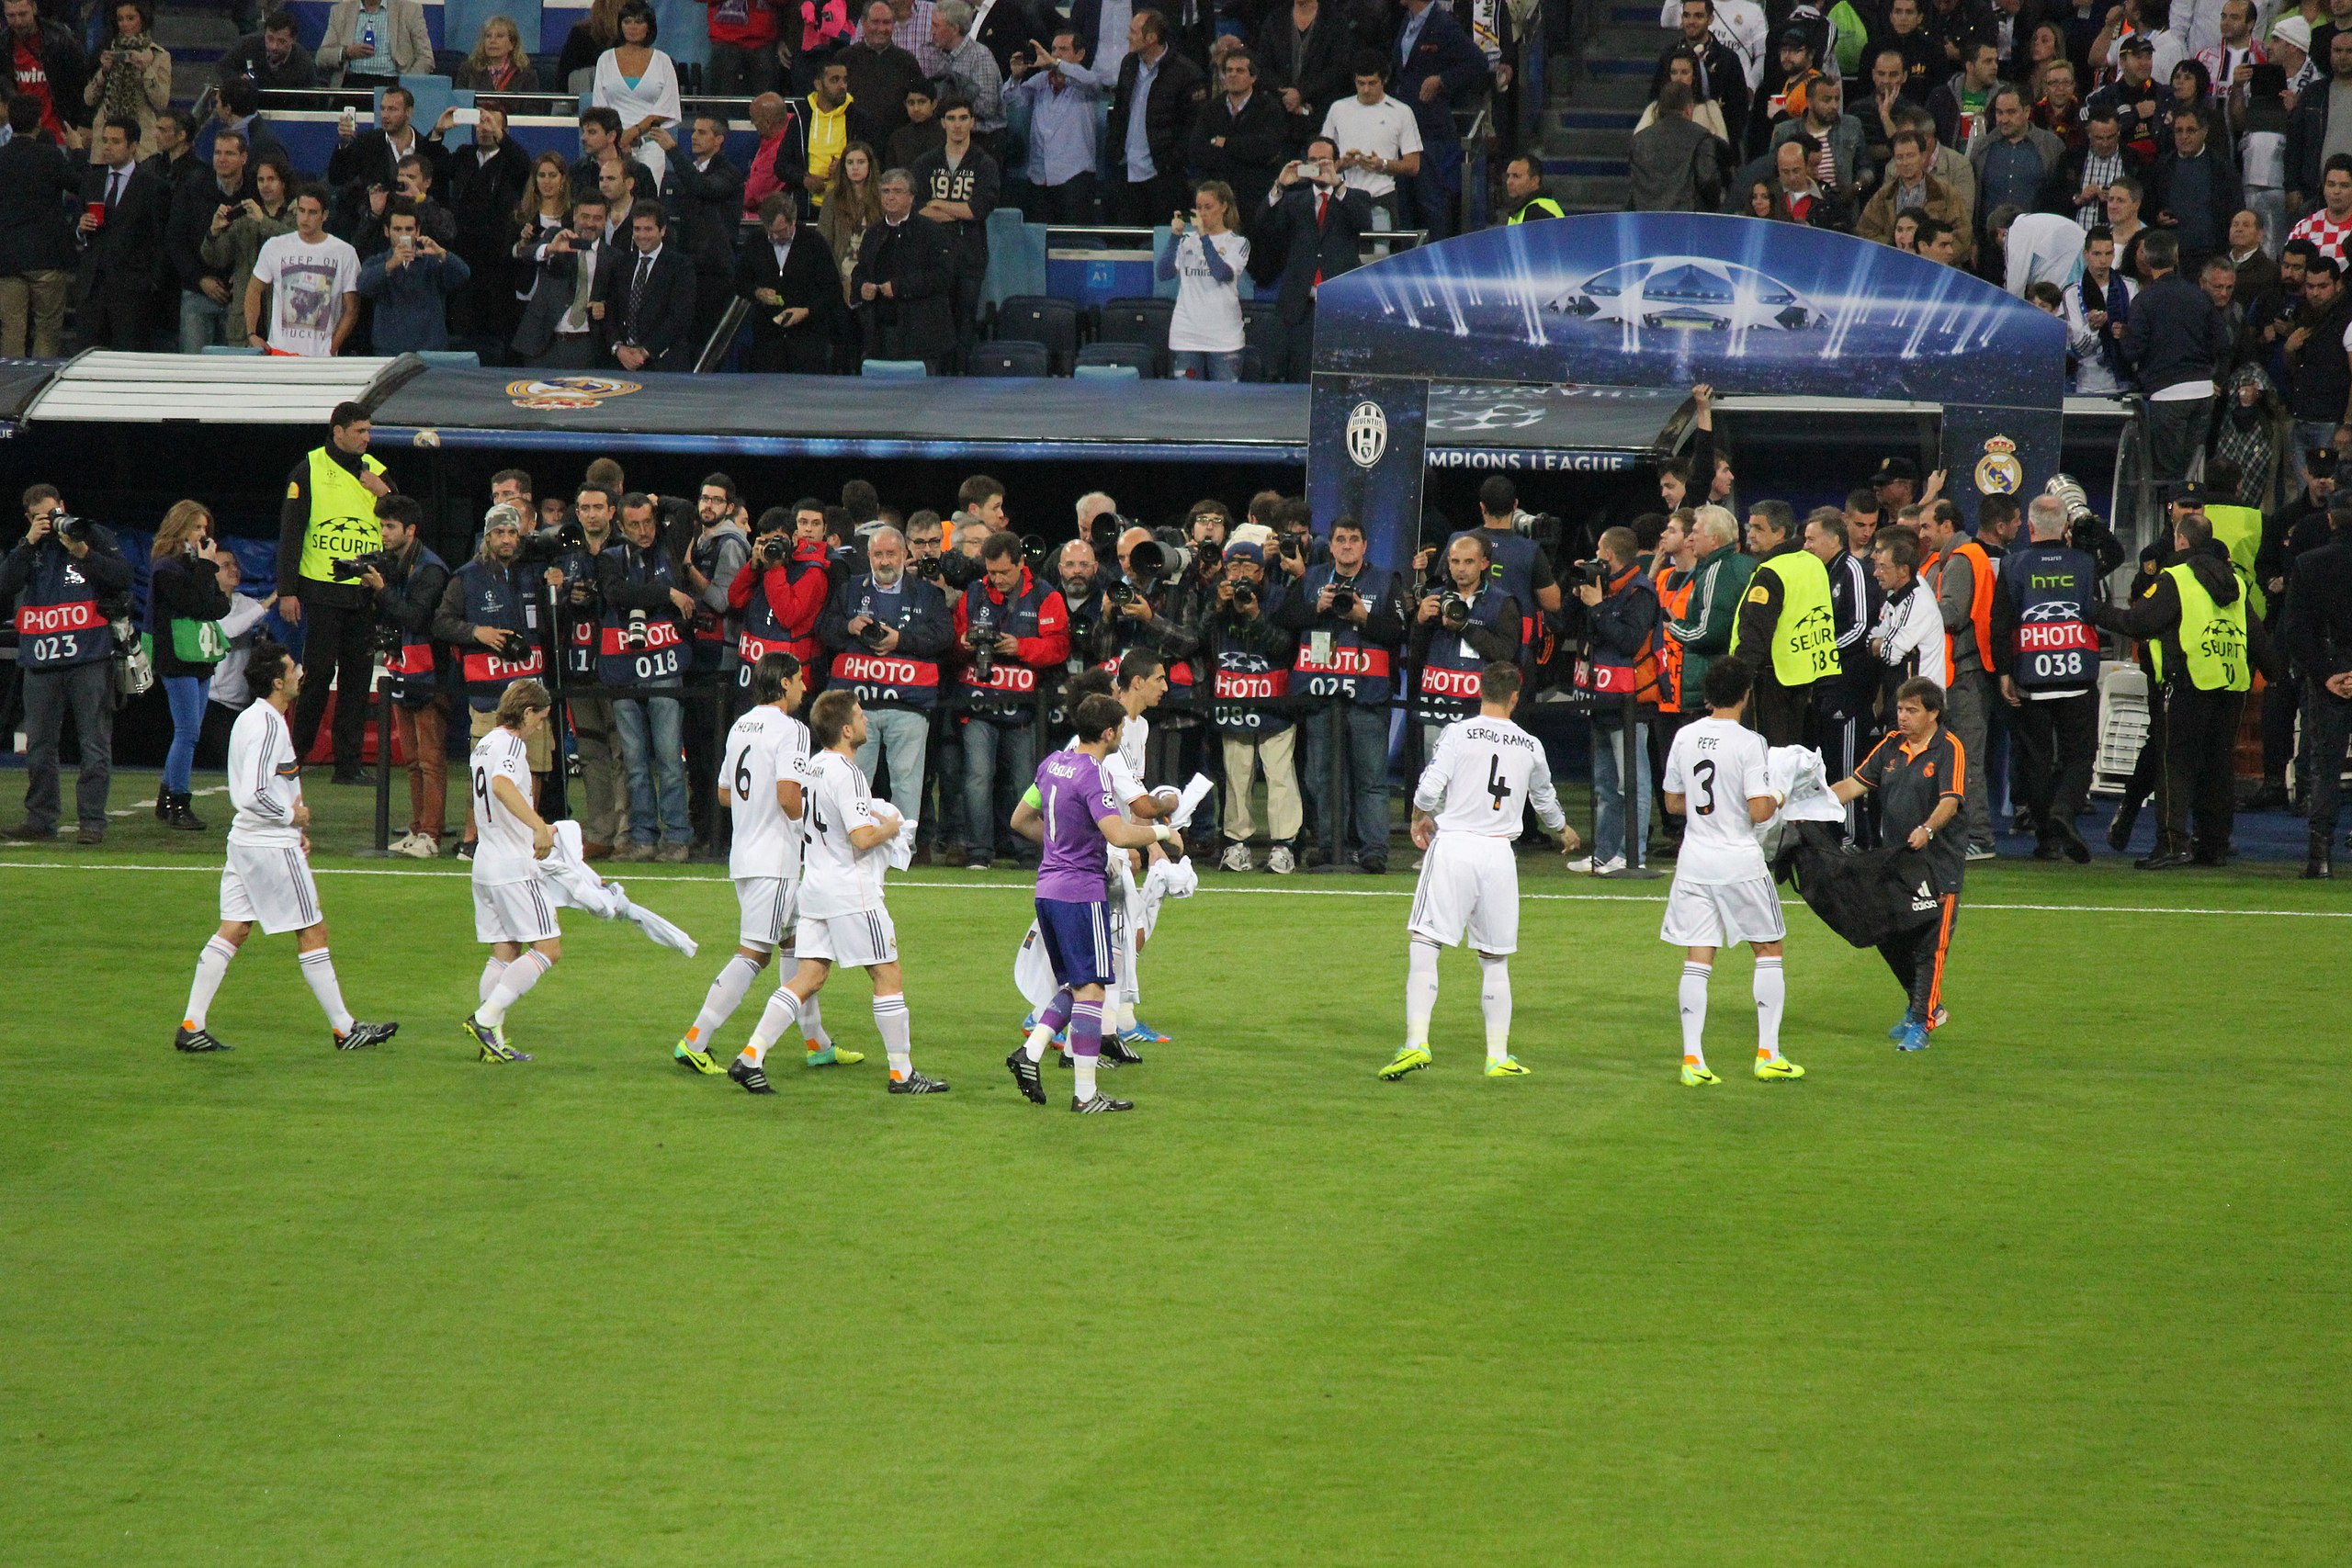 File:Real Madrid vs Juventus, 24 October 2013 Champions League 07.JPG - Wikimedia Commons